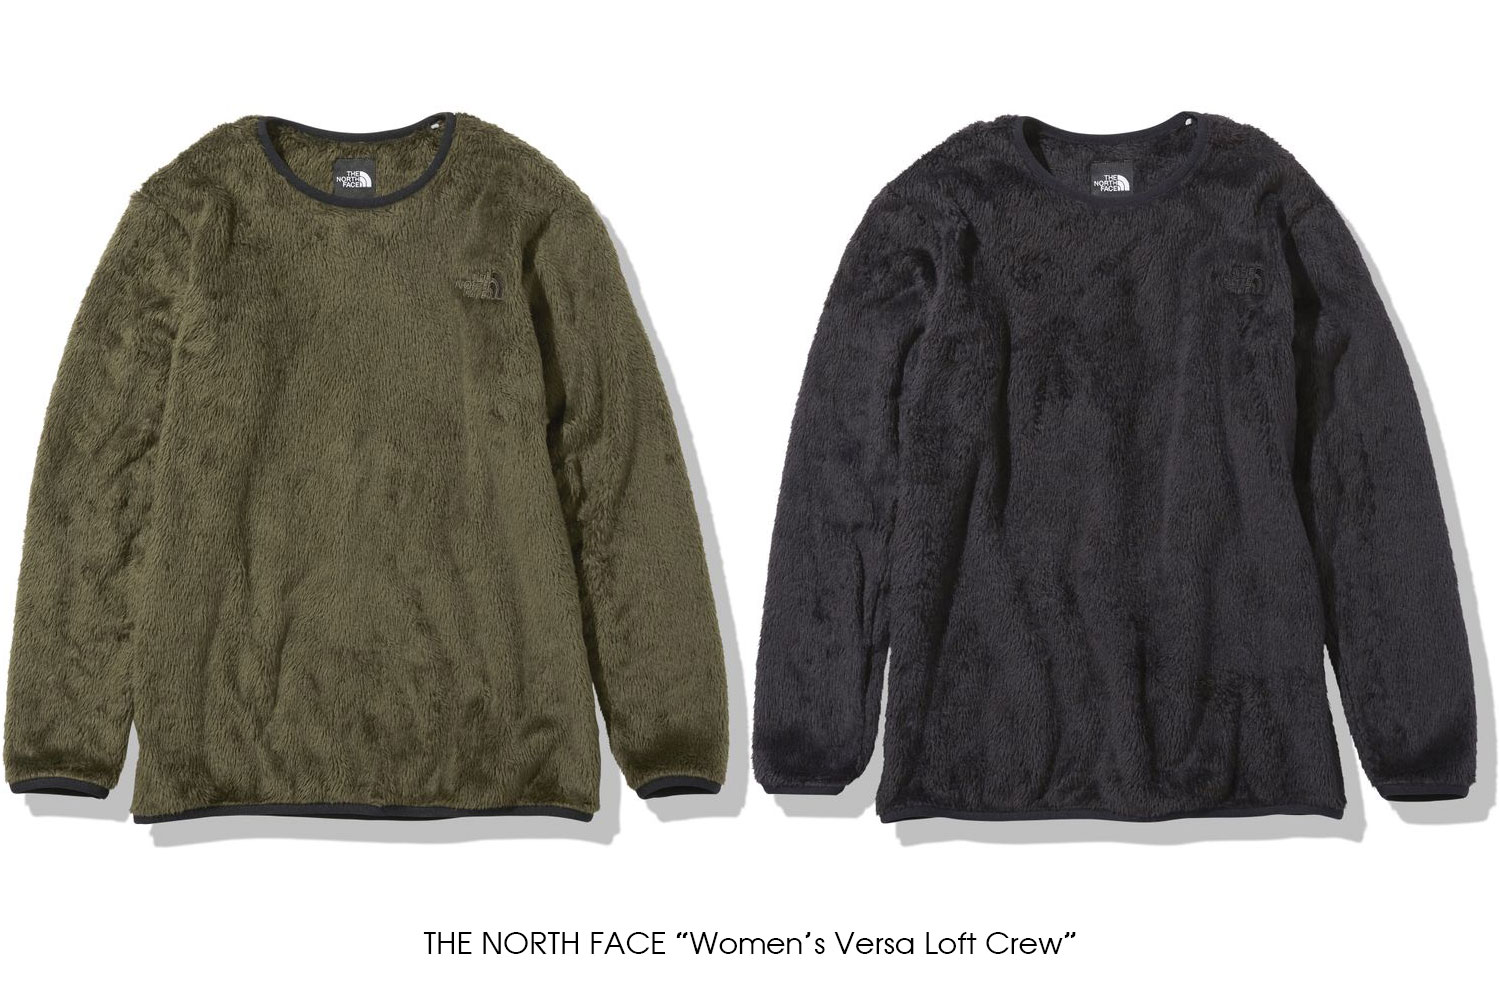 THE NORTH FACE "Women's Versa Loft Crew"